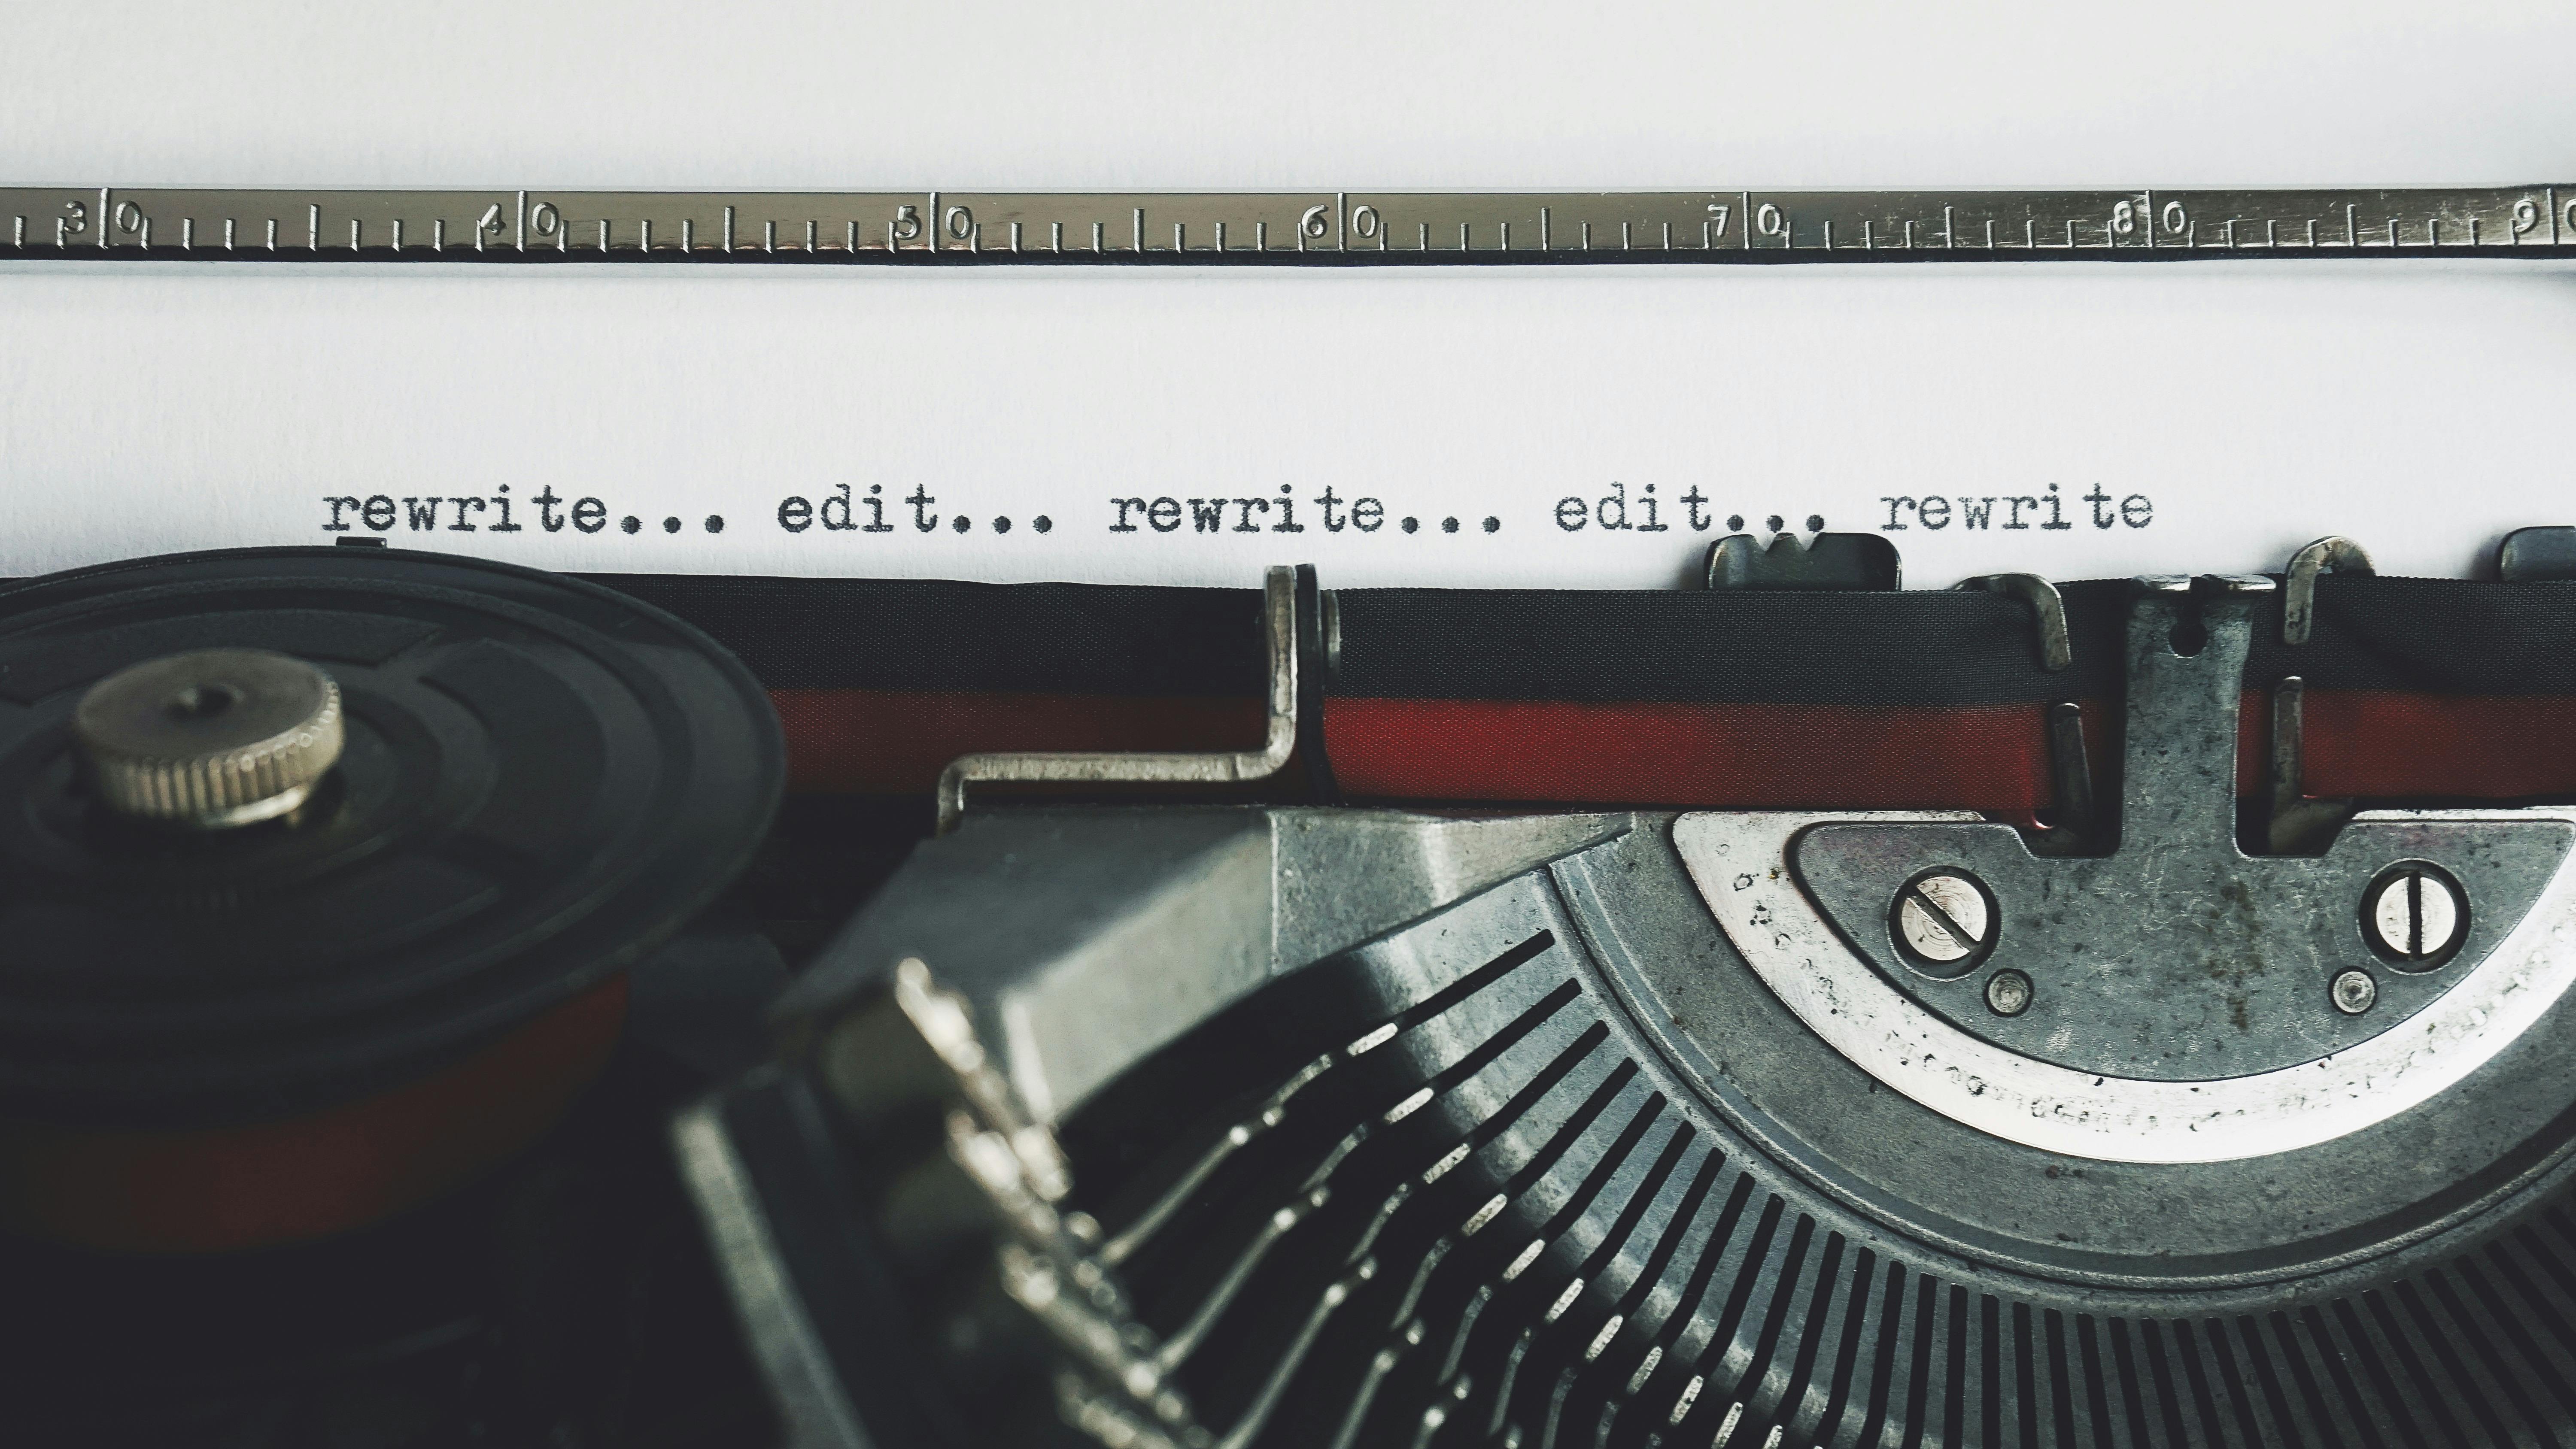 Rewrite Edit Text on a Typewriter · Free Stock Photo